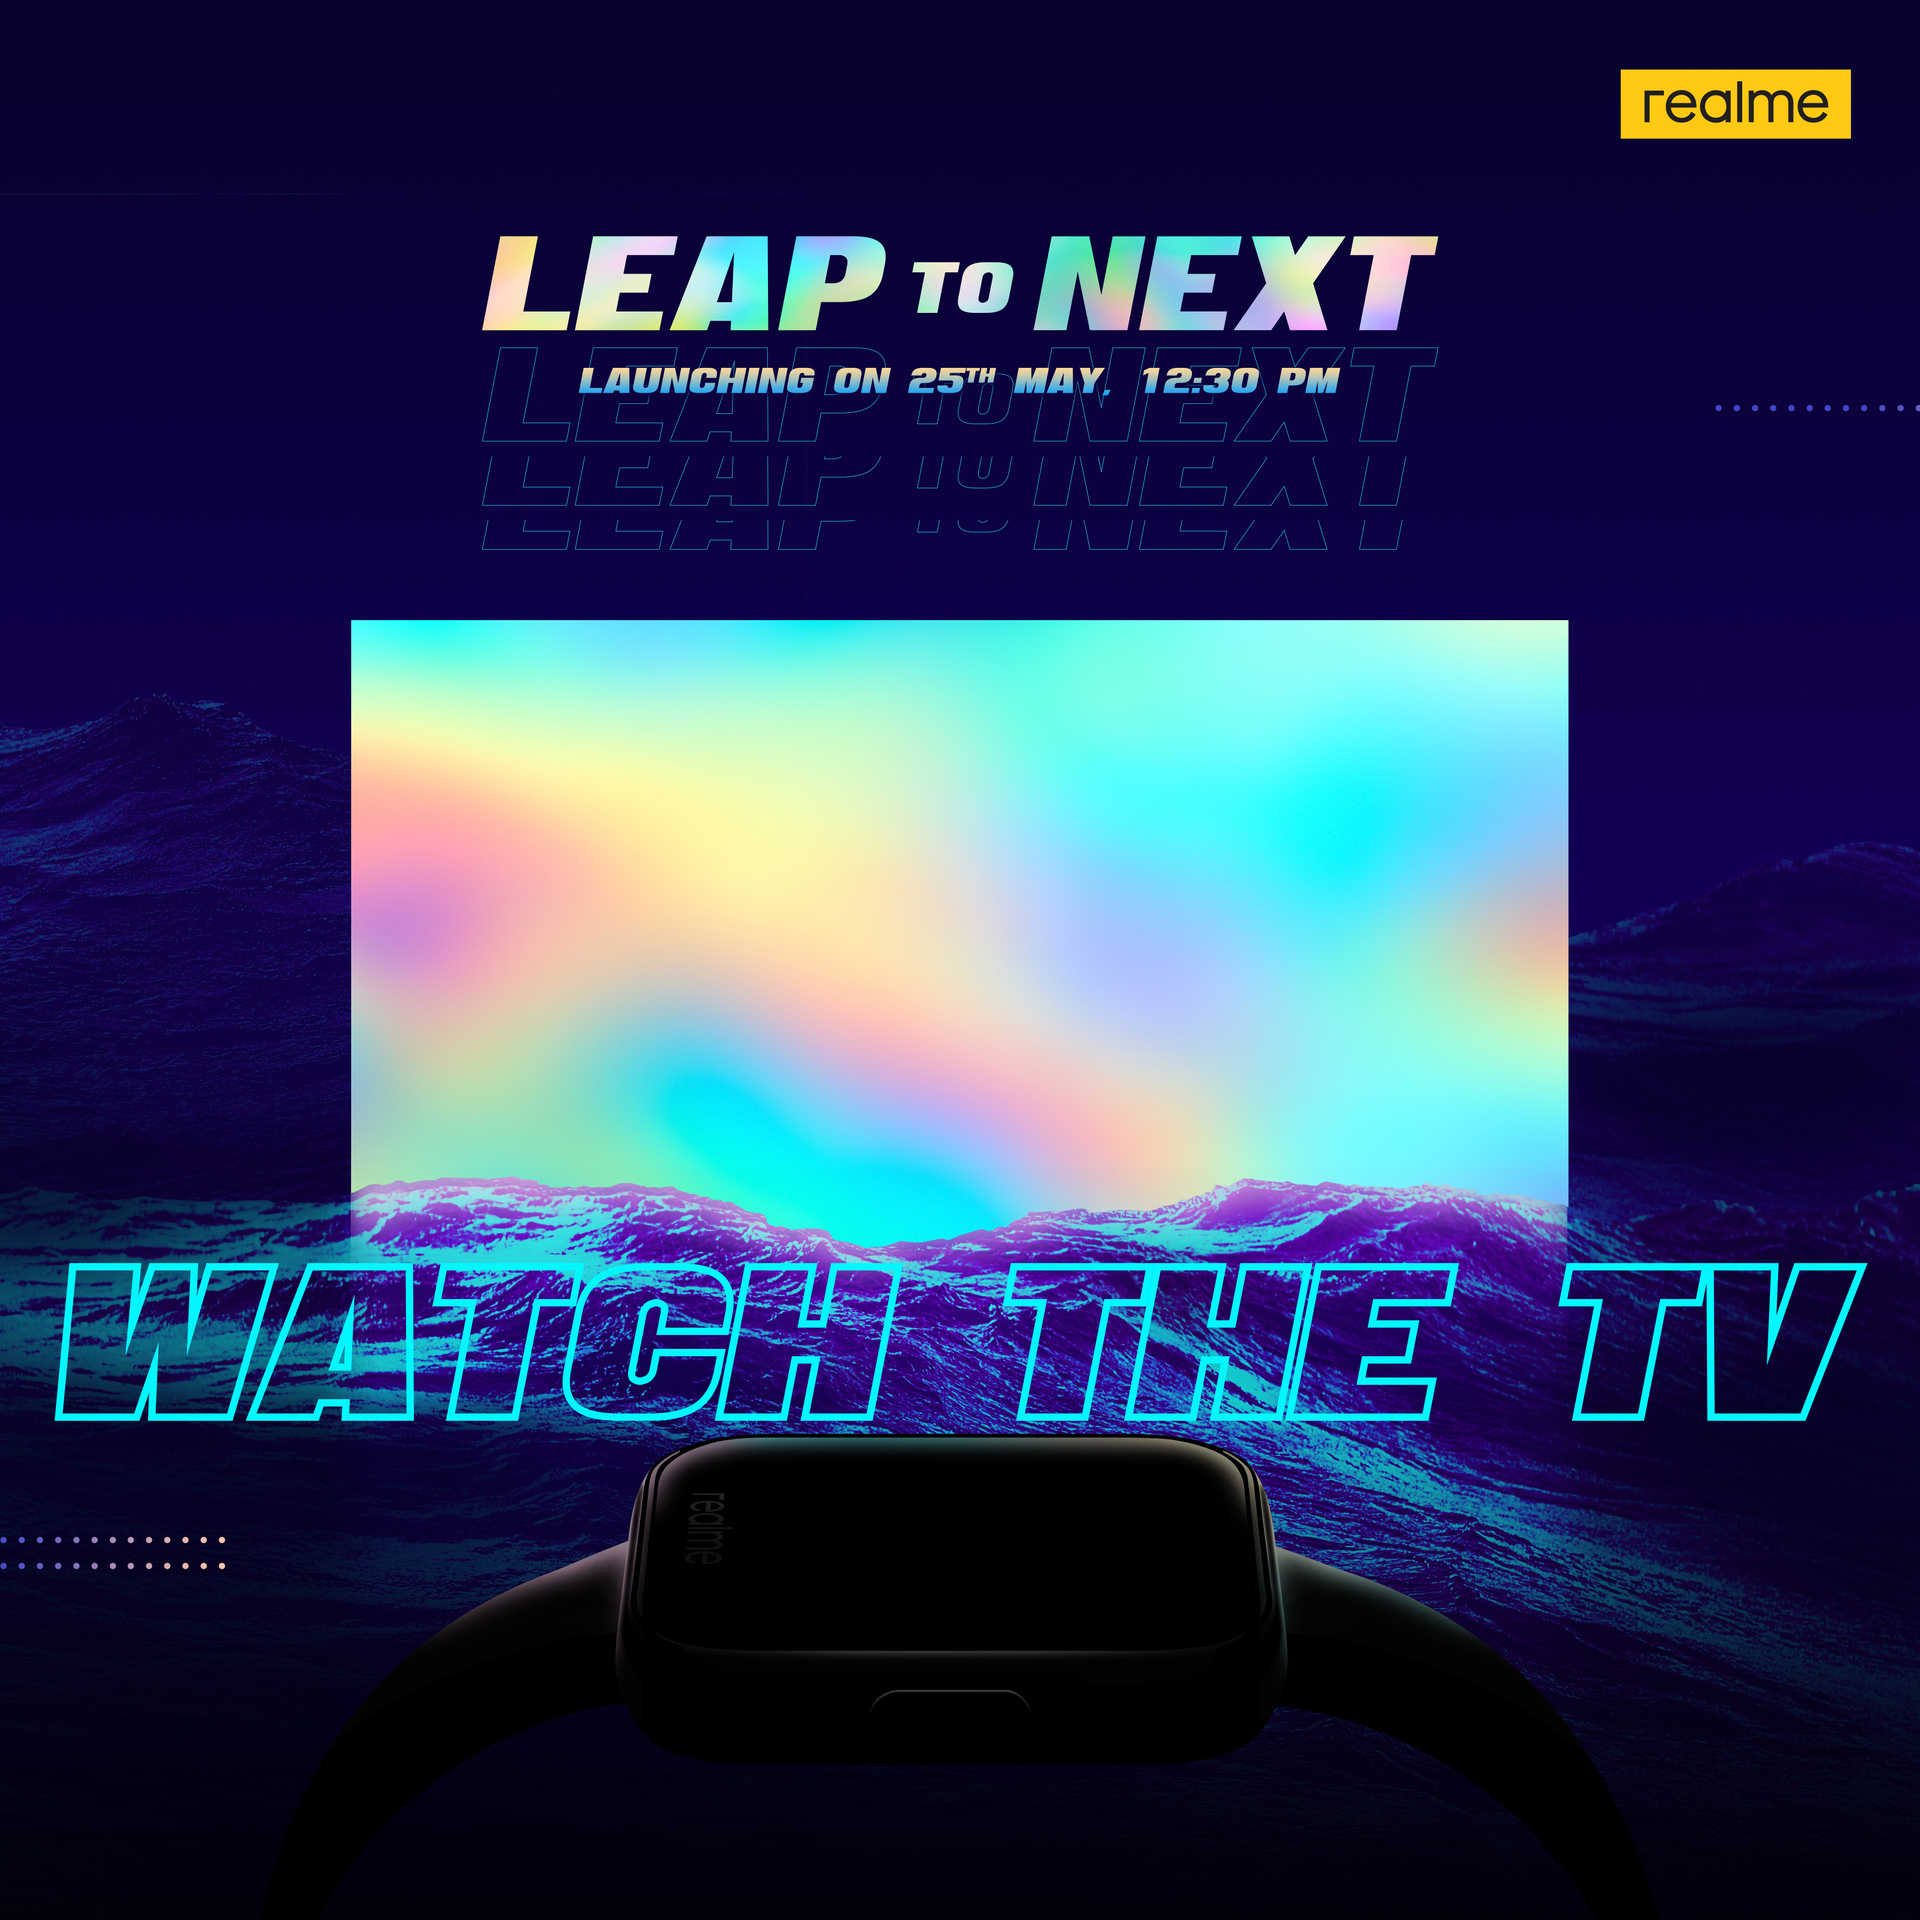 realme smartwatch tv launch teaser